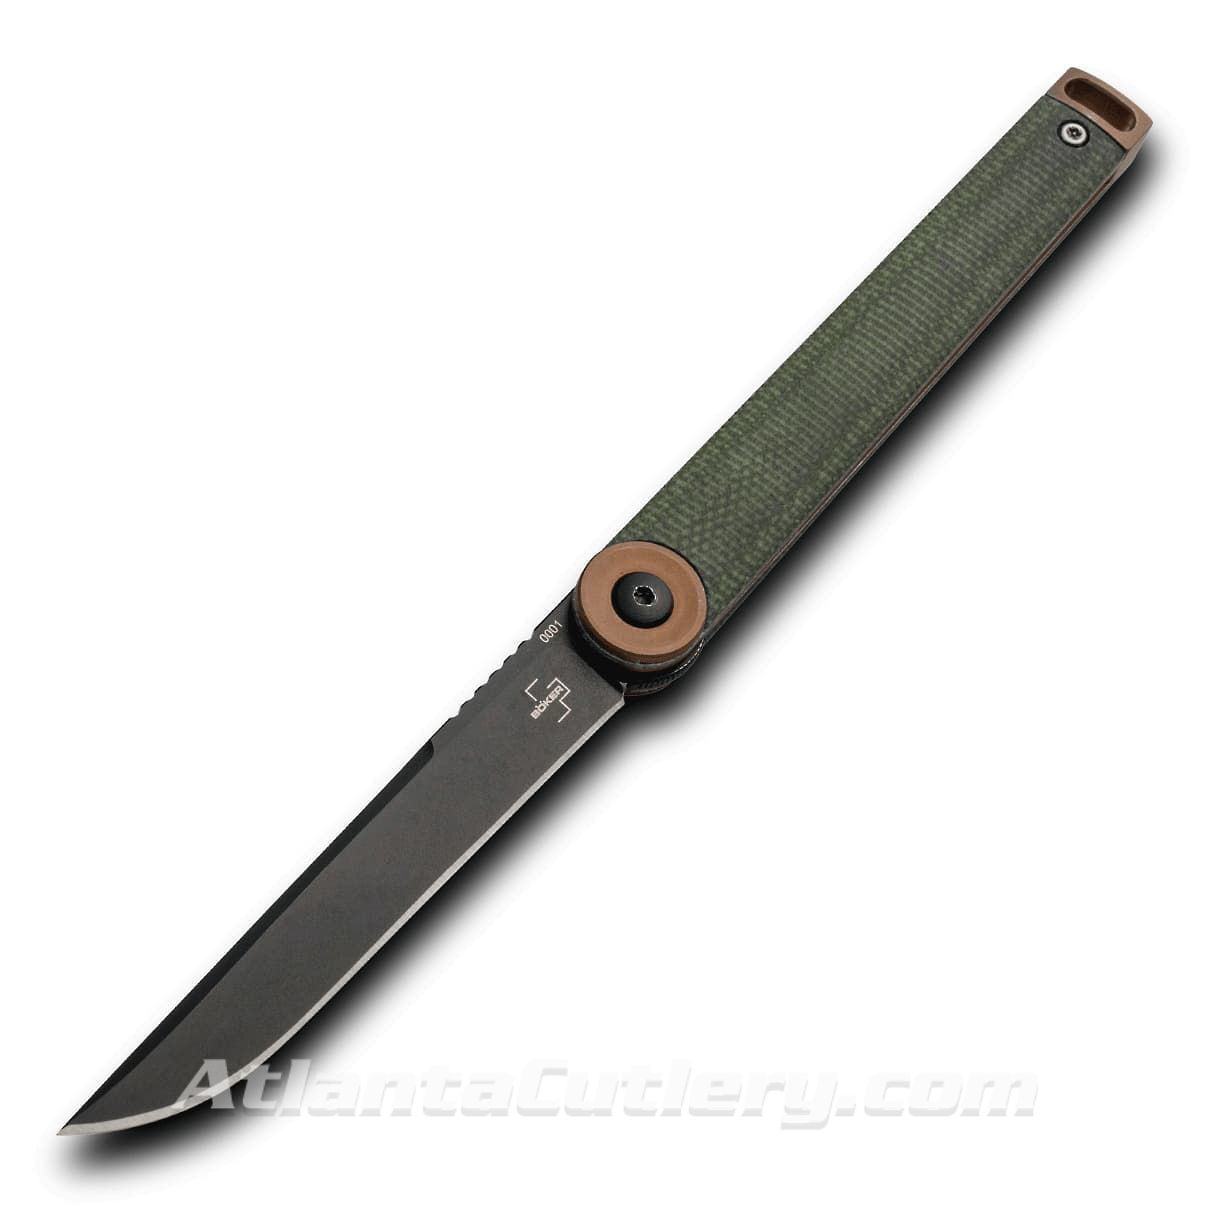 Boker Plus Kaizen with D2 steel blade, minimalist flipper, textured olive green micarta handle, pocket clip, nylon storage pouch